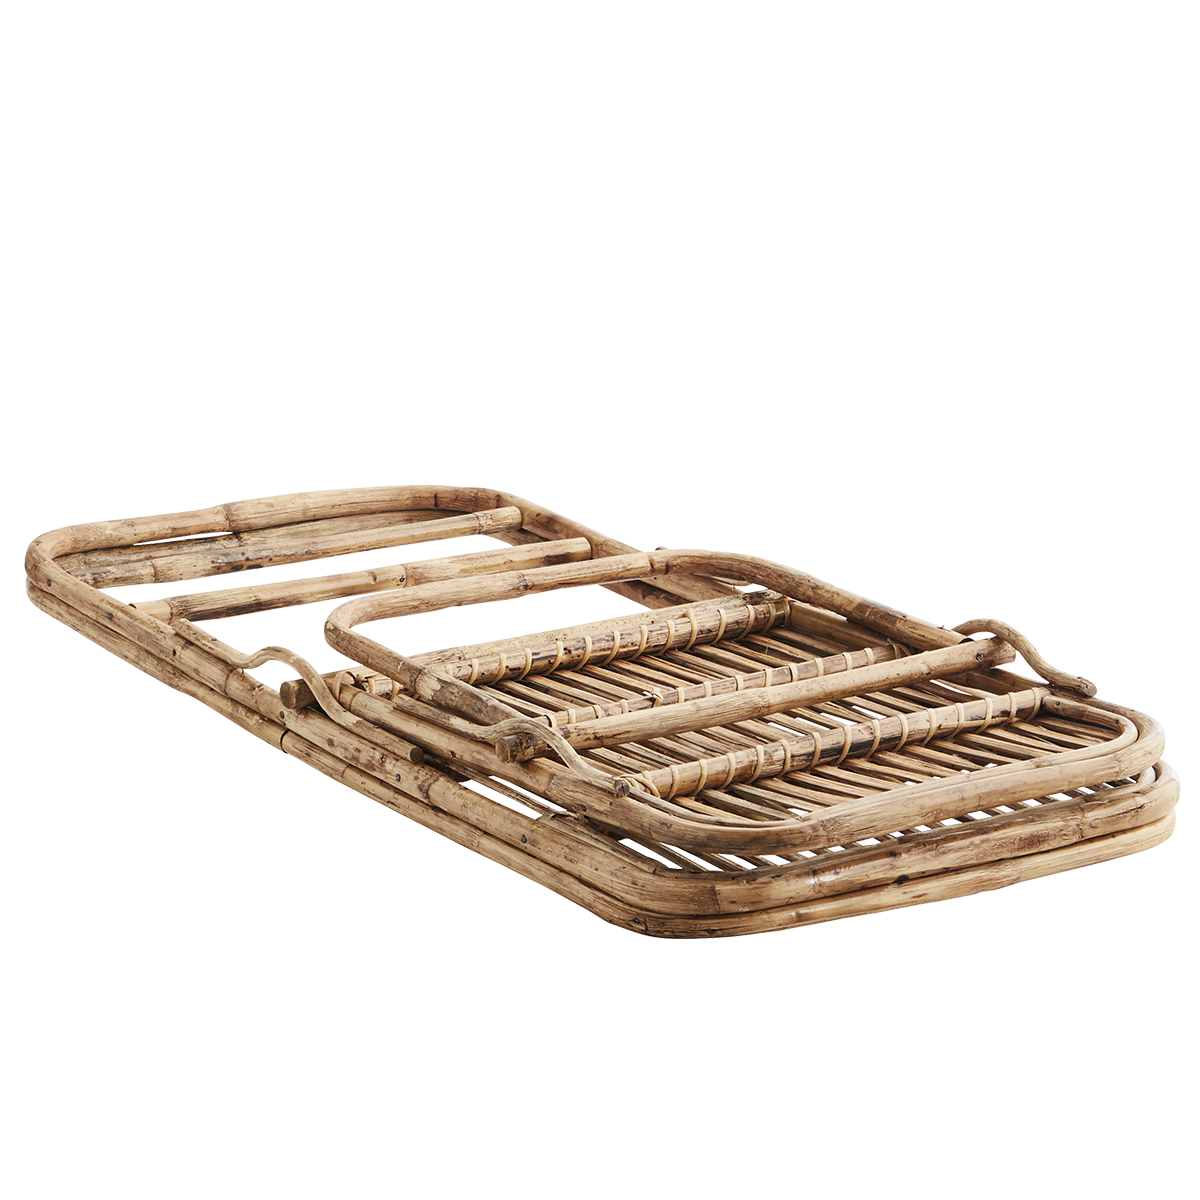 Foldable bamboo beach chair